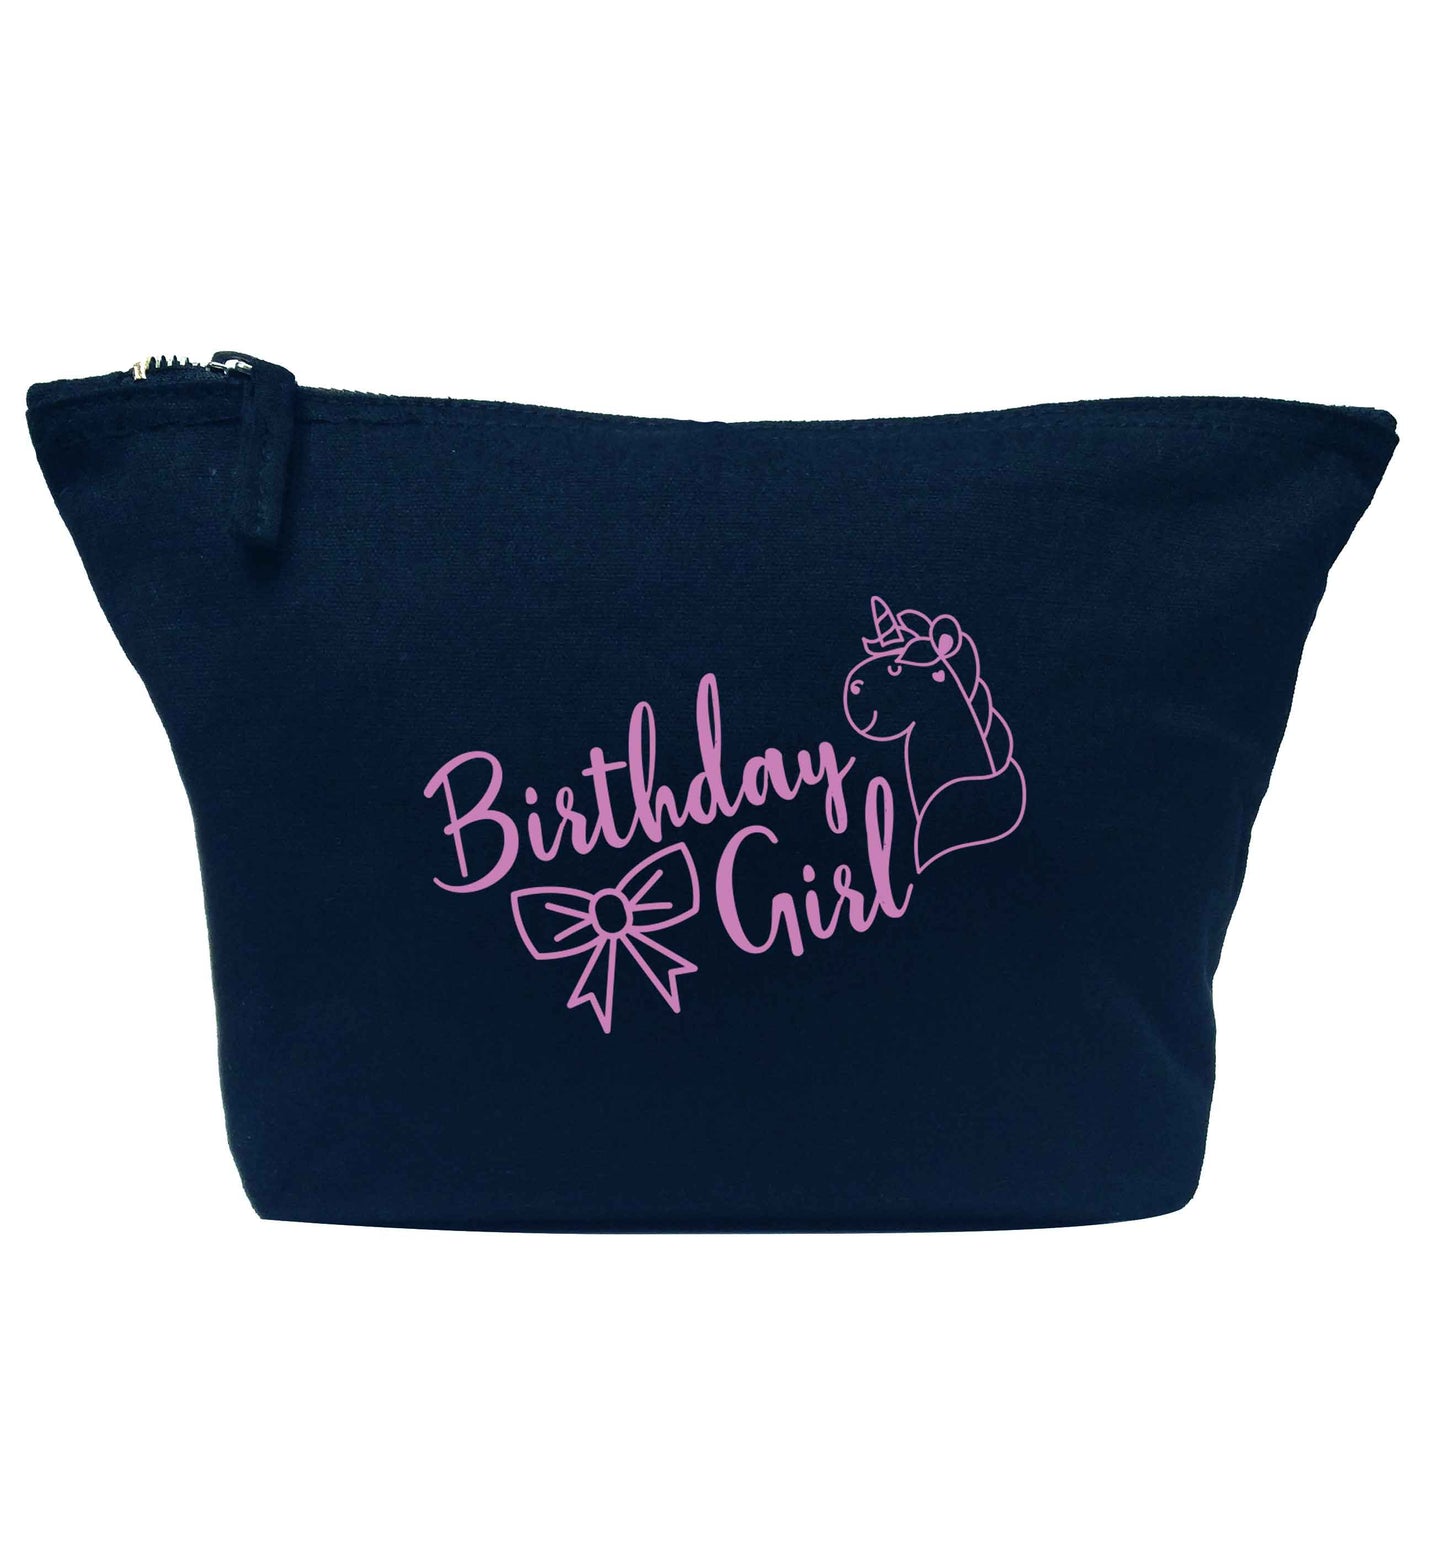 Birthday girl navy makeup bag